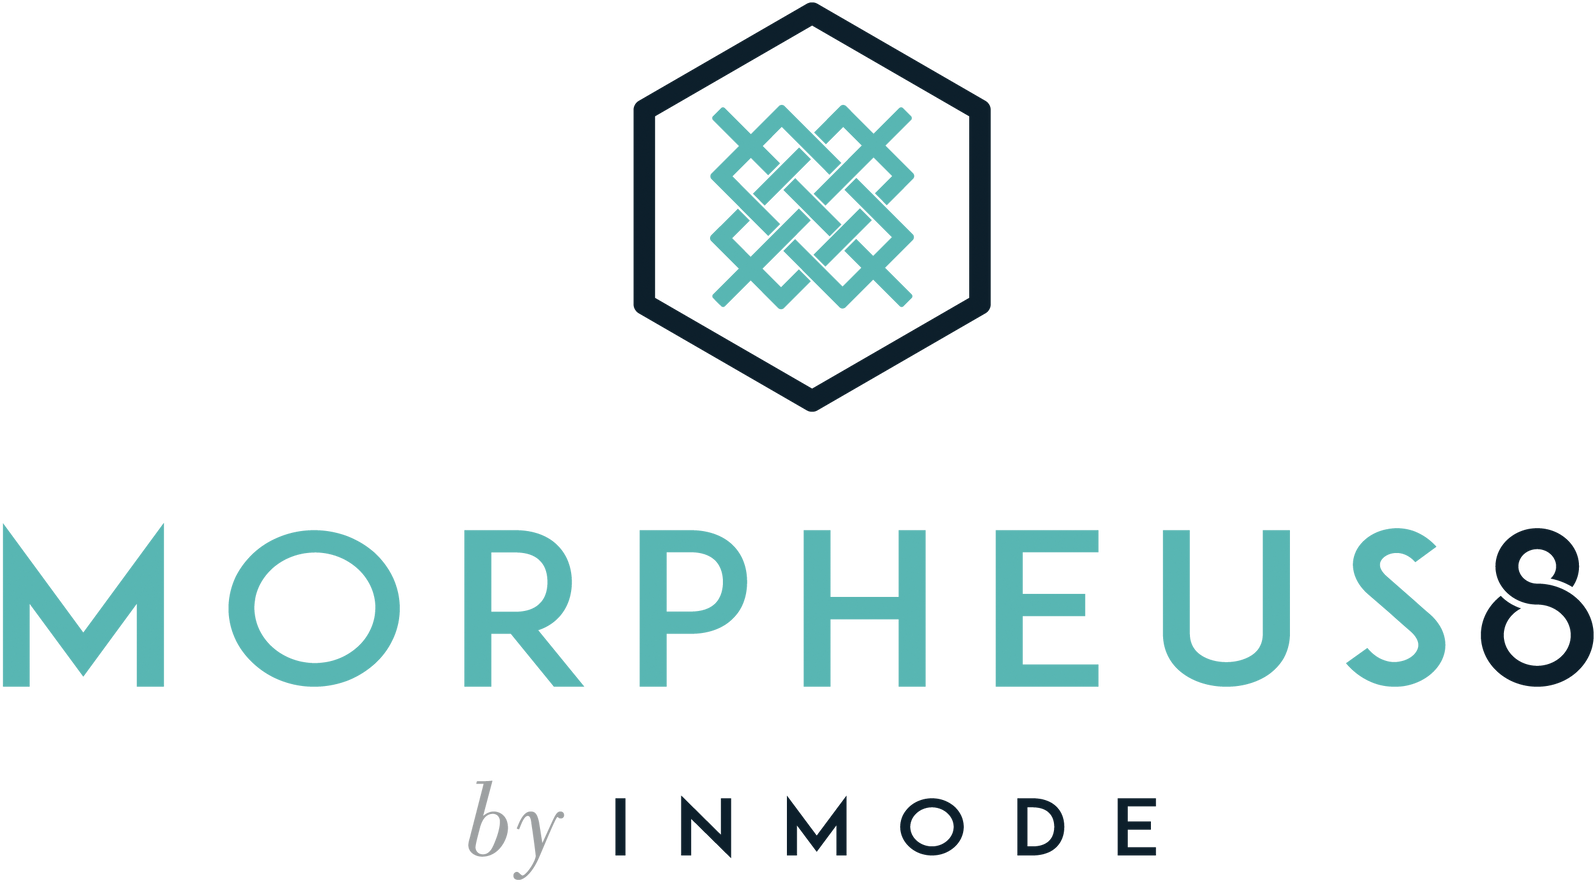 Morpheus8 Logo